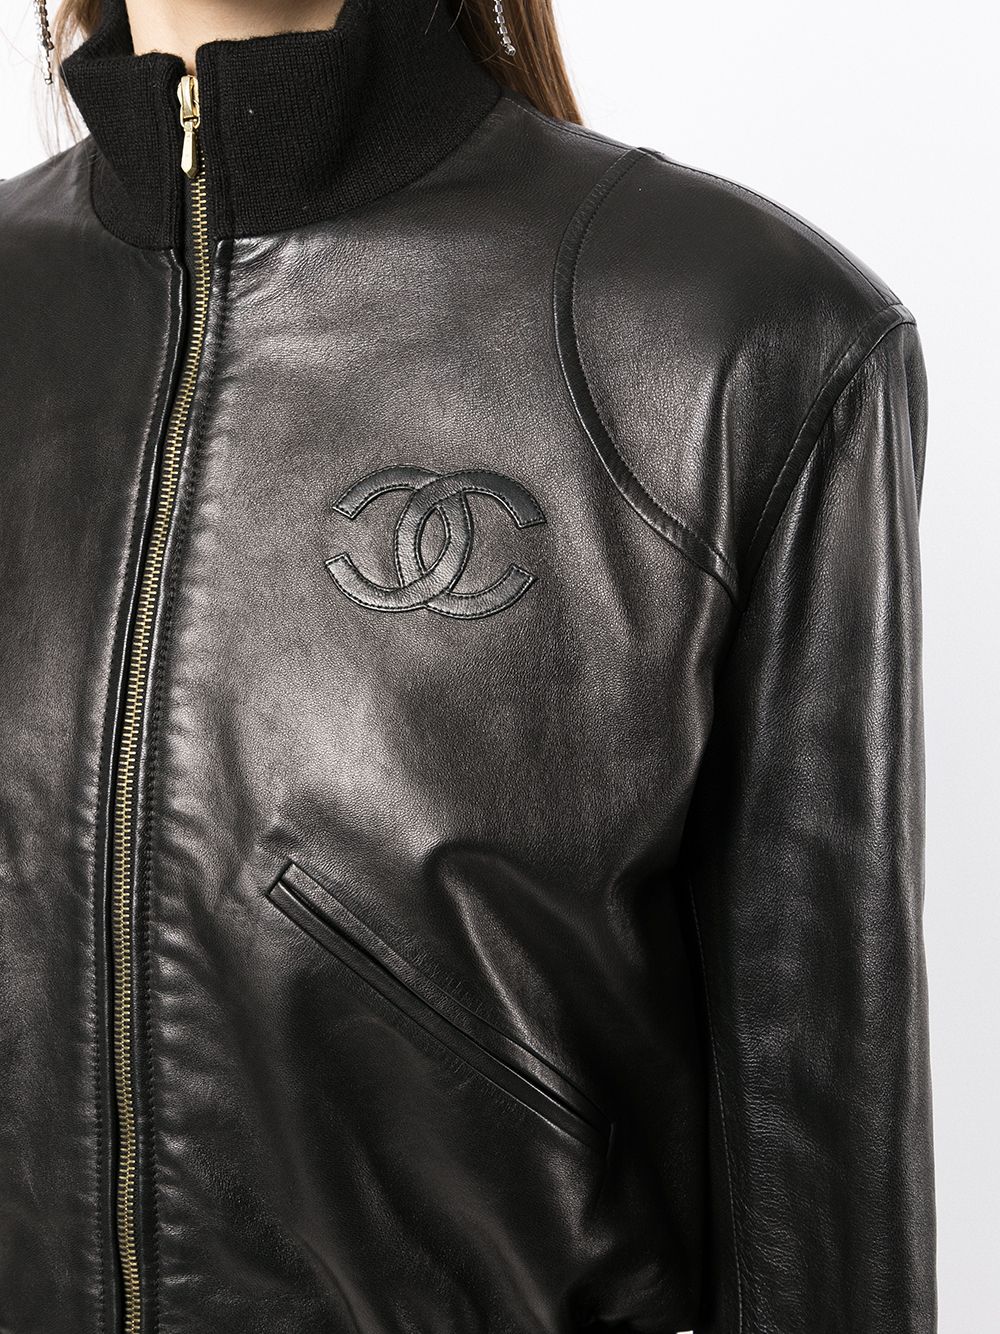 фото Chanel pre-owned кожаная куртка 1990-х годов с логотипом cc